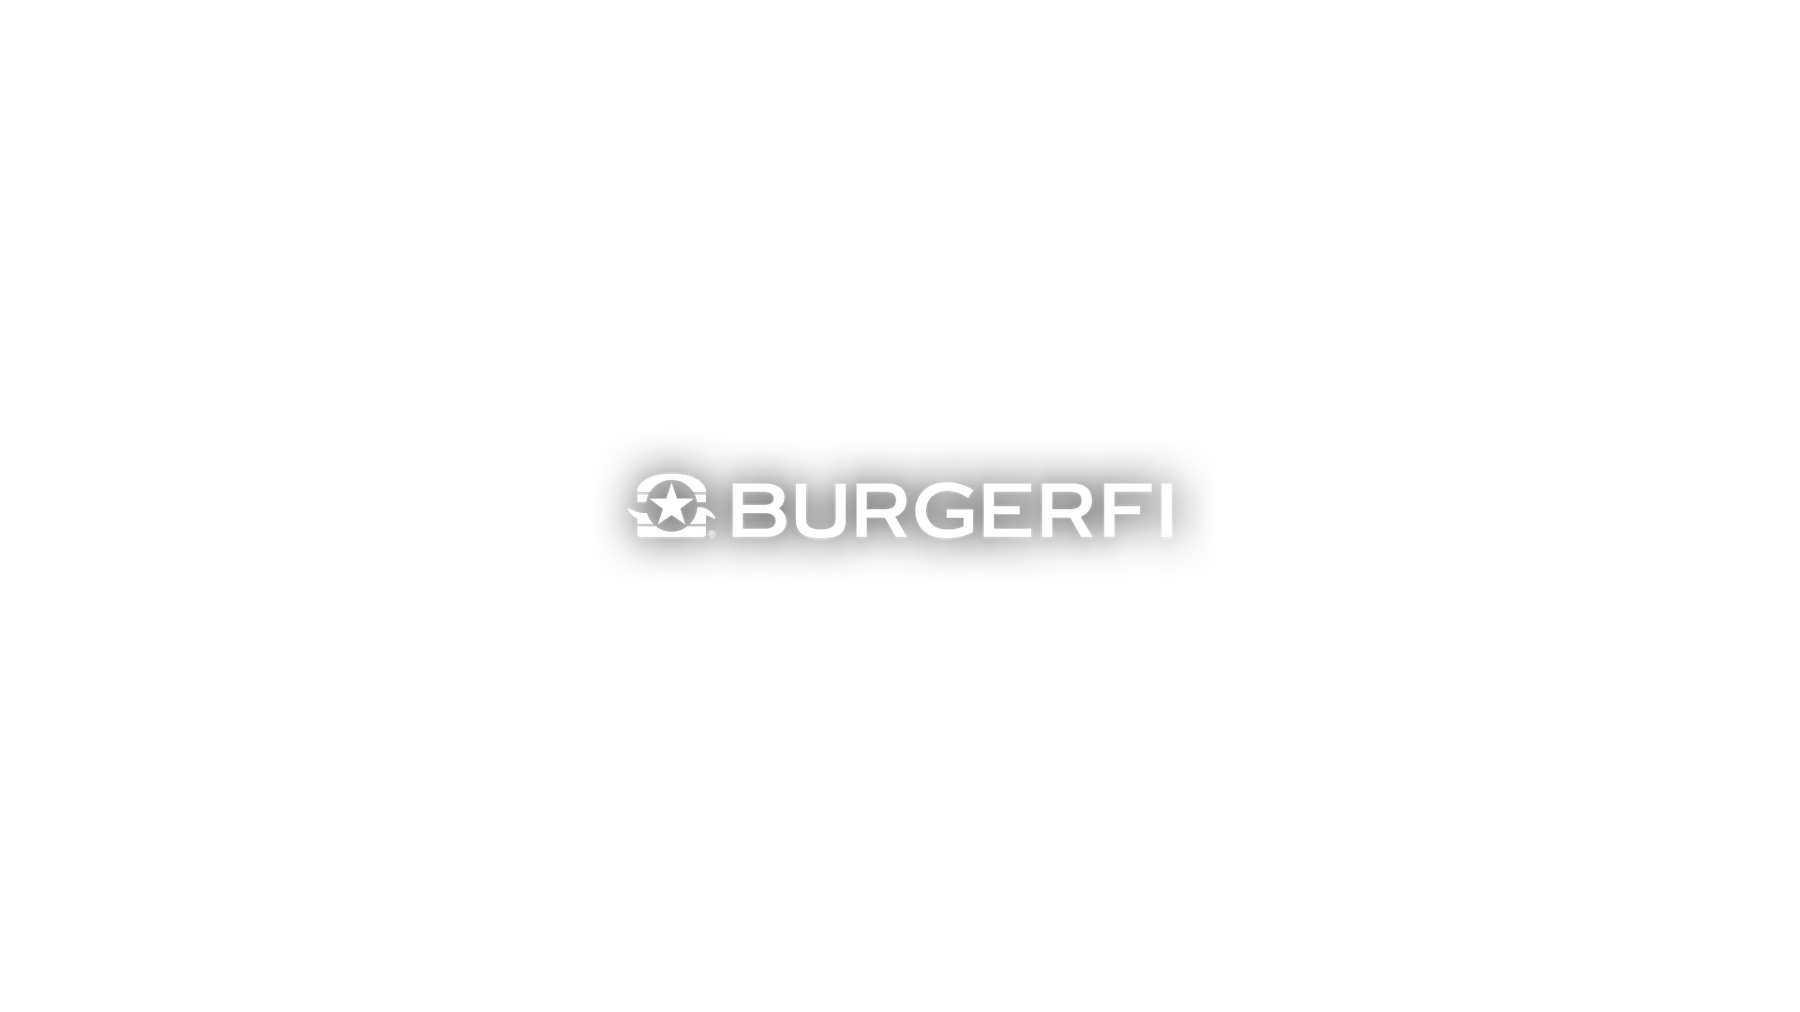 Burgerfi logo center